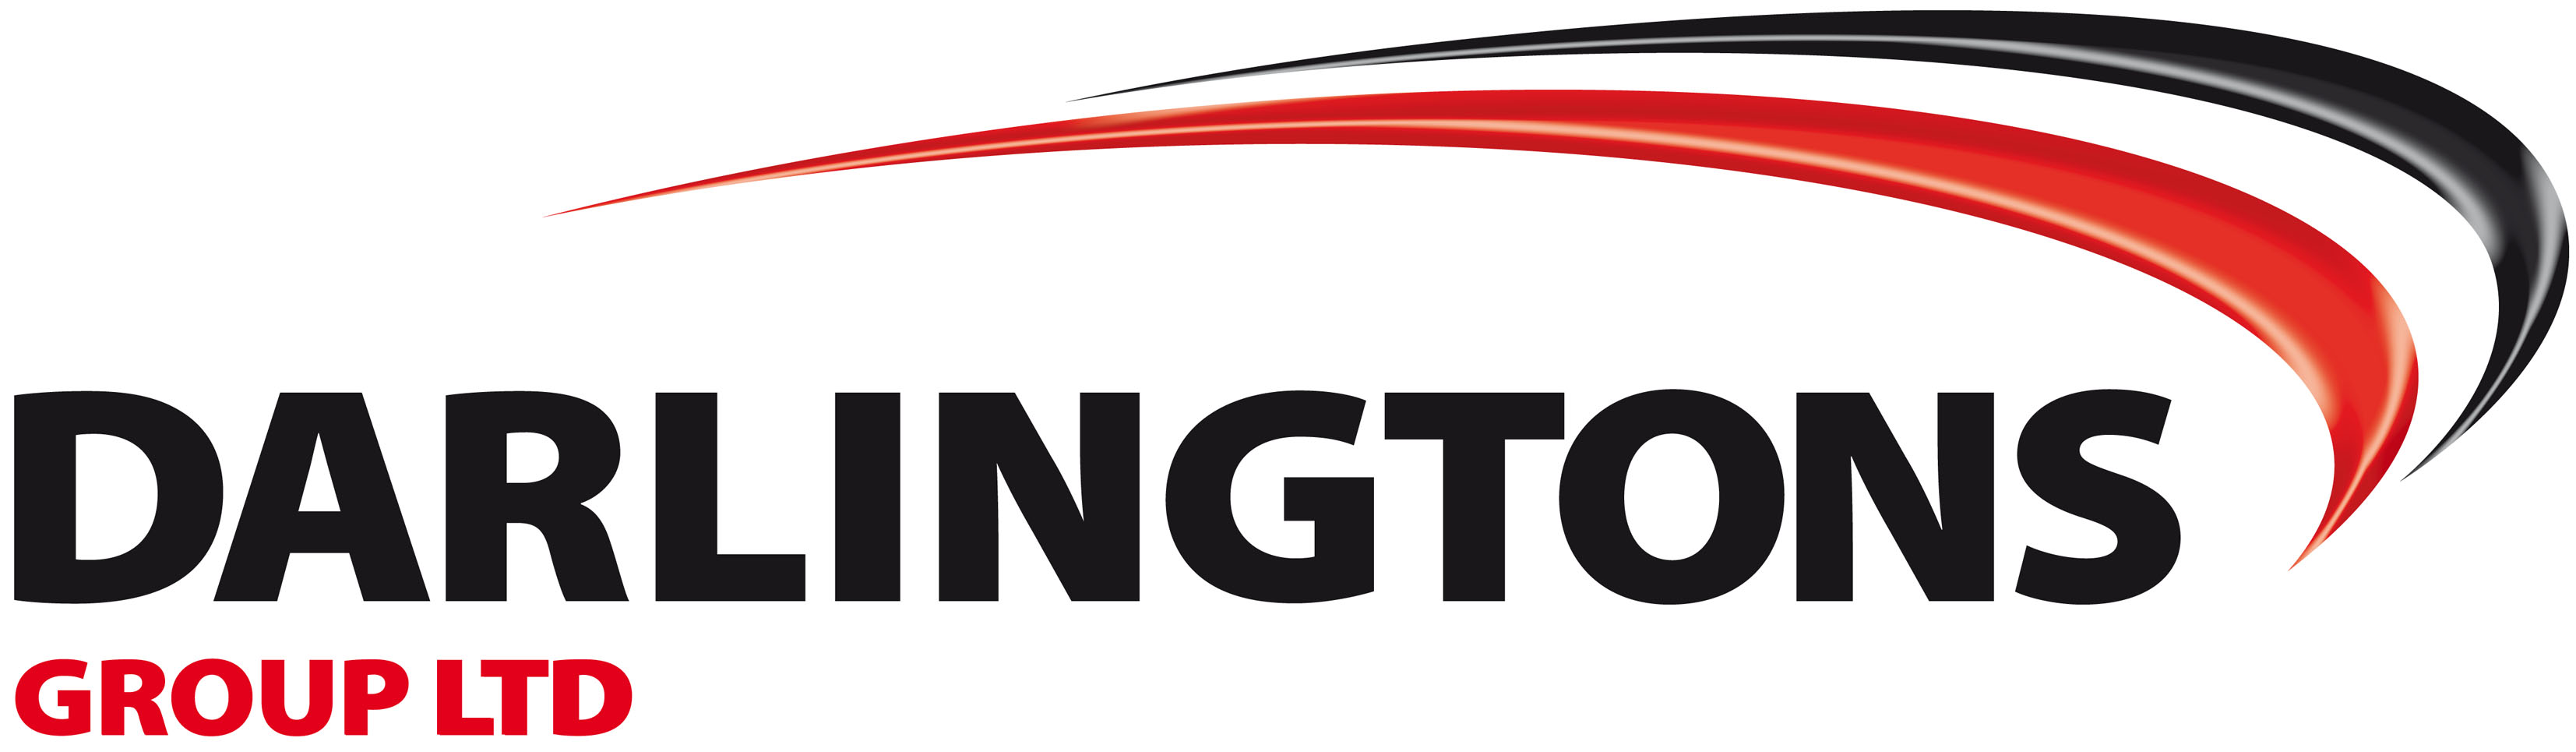 Darlingtons Group Ltd